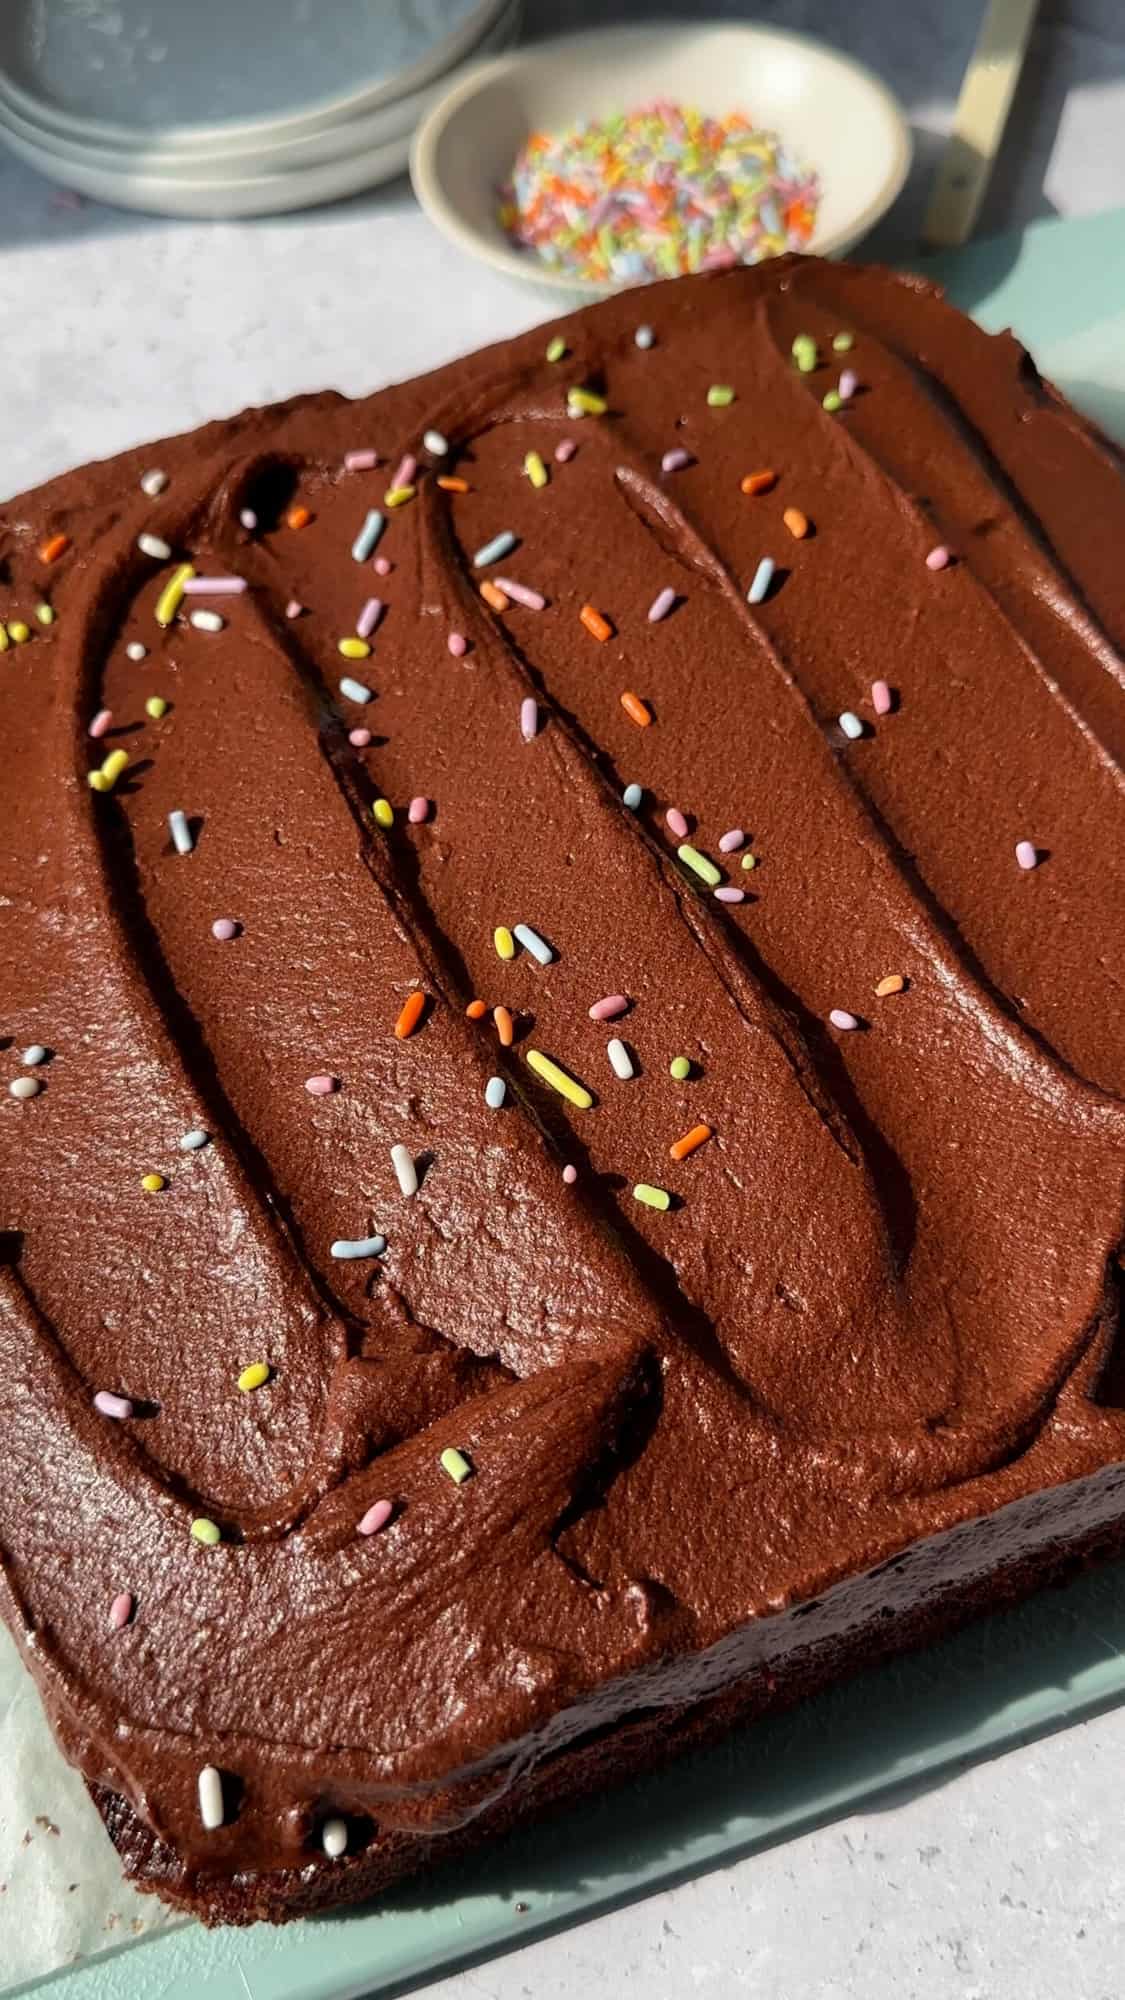 sprinkles on a chocolate cake.